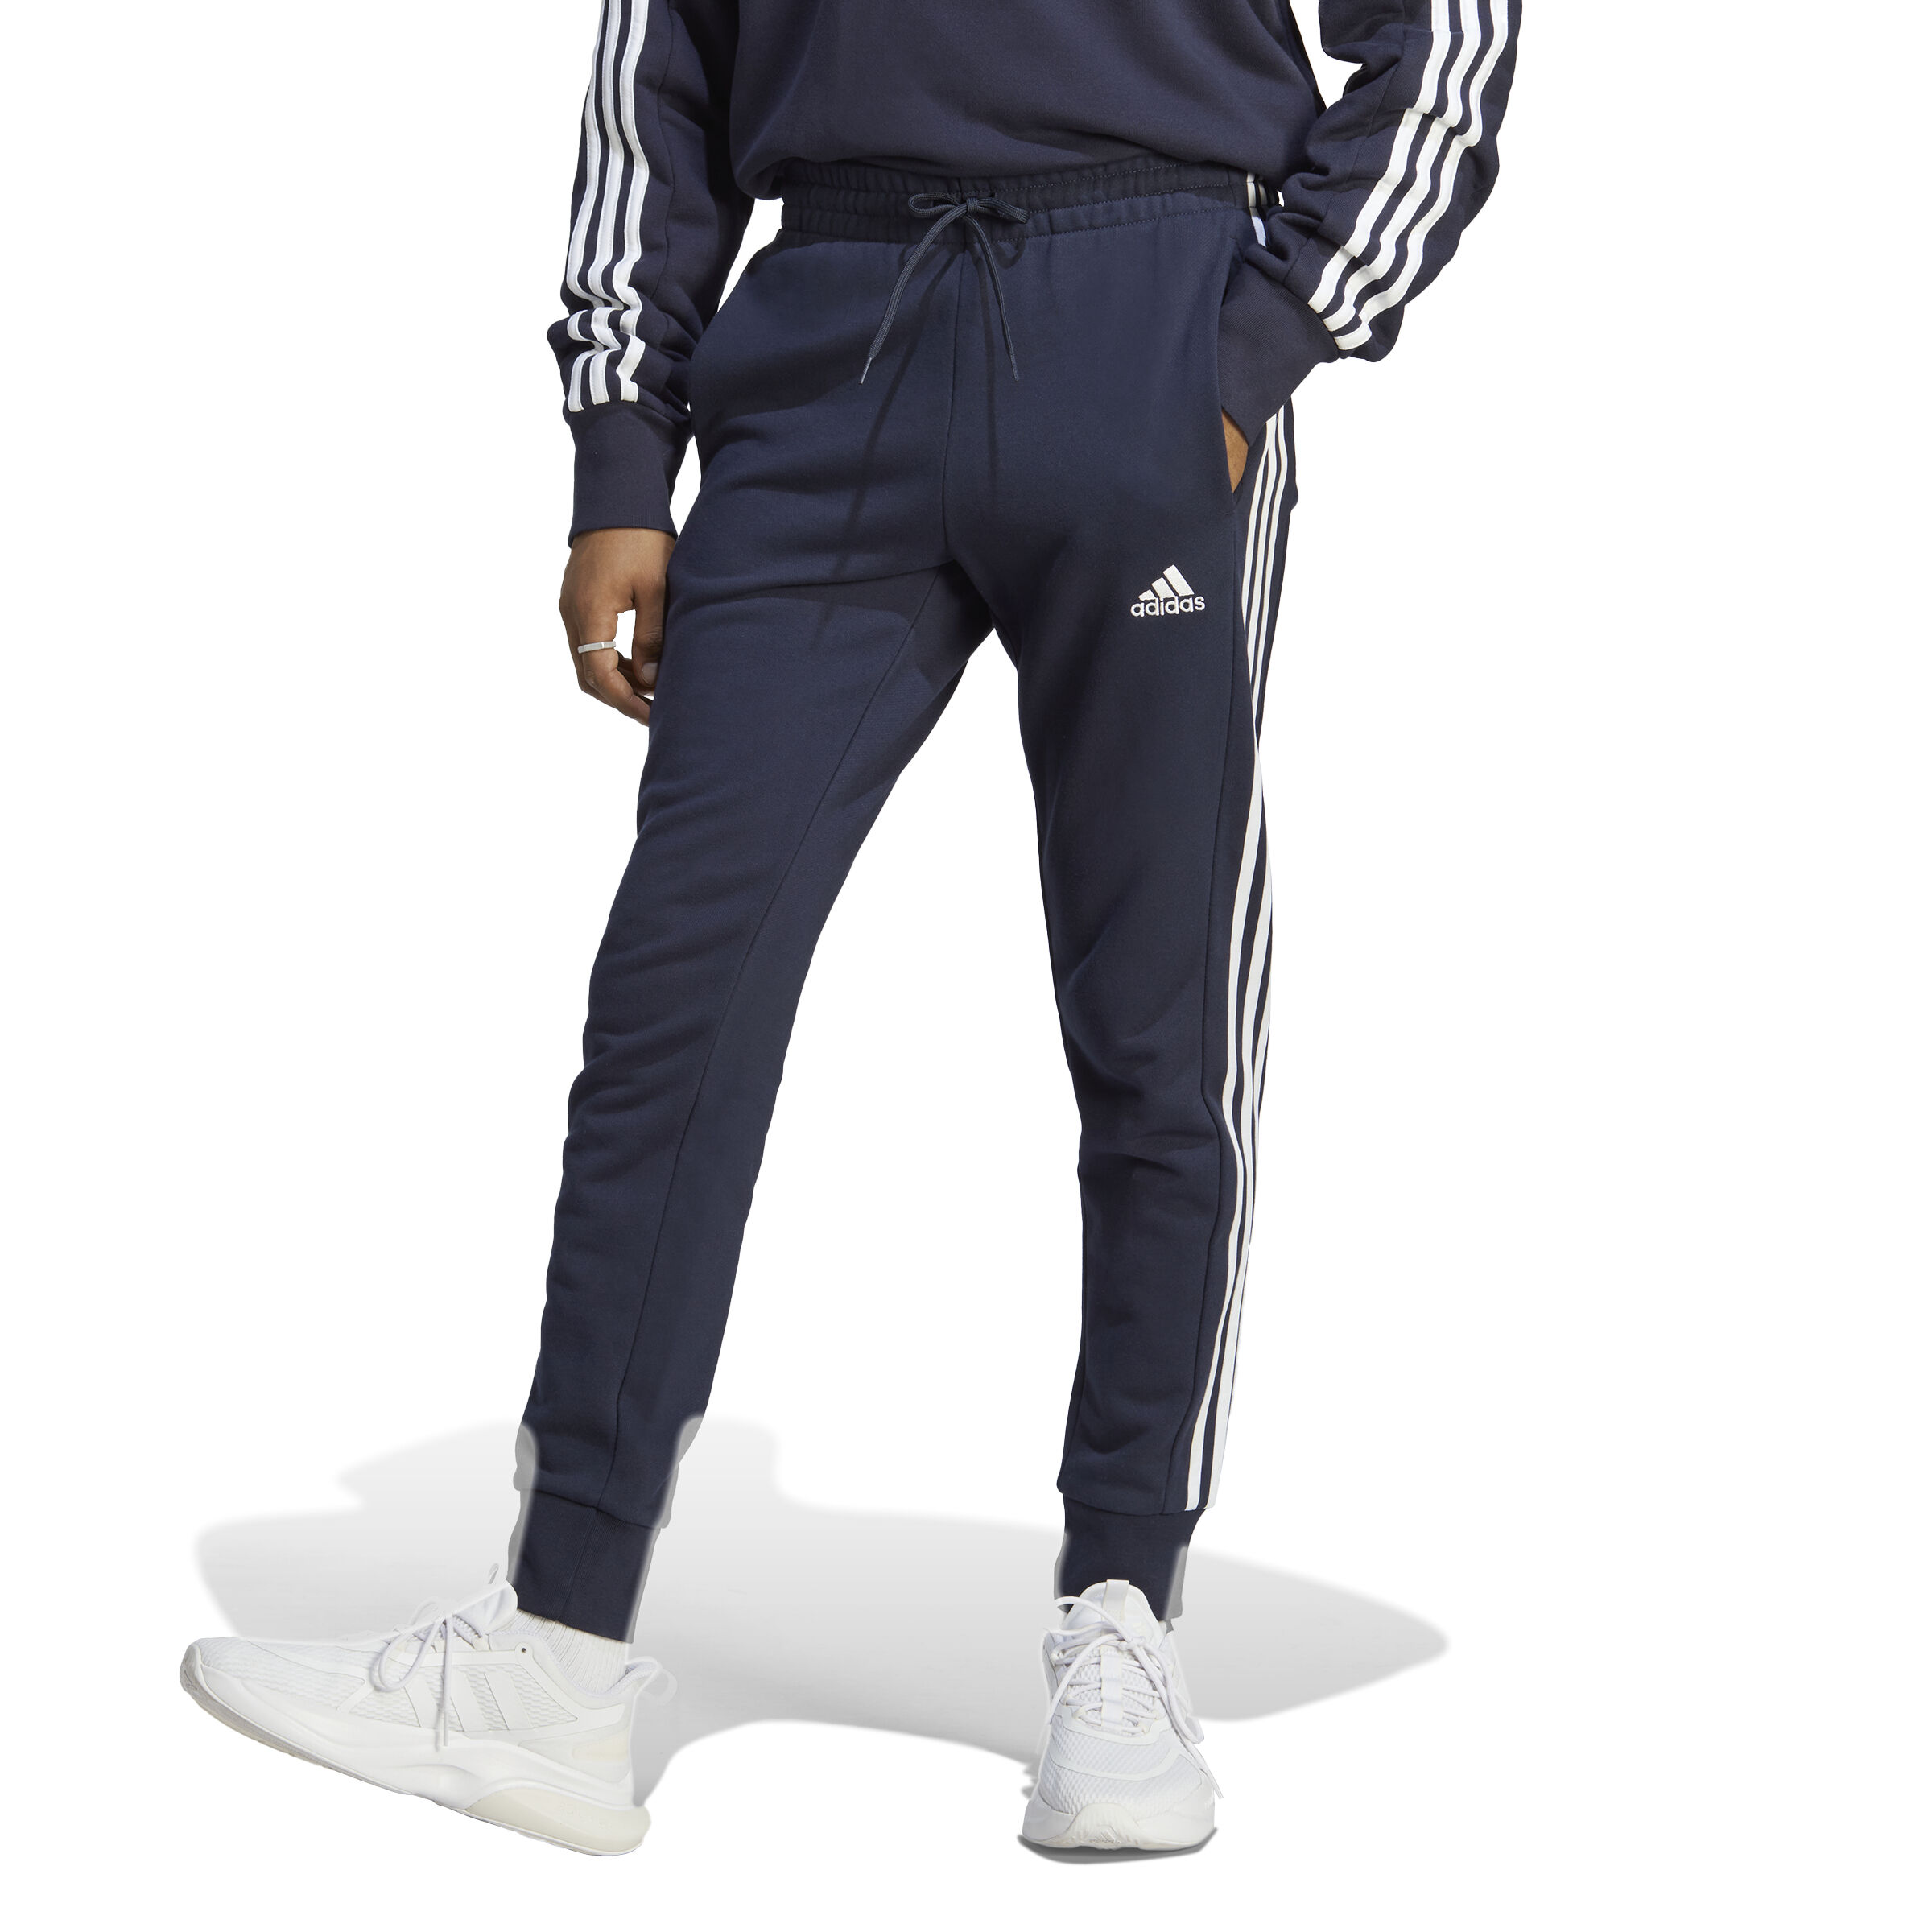 Adidas Joggers L Jet Black Grey 3 Stripes Polyester Sweatpants Ankle  Zippers | eBay